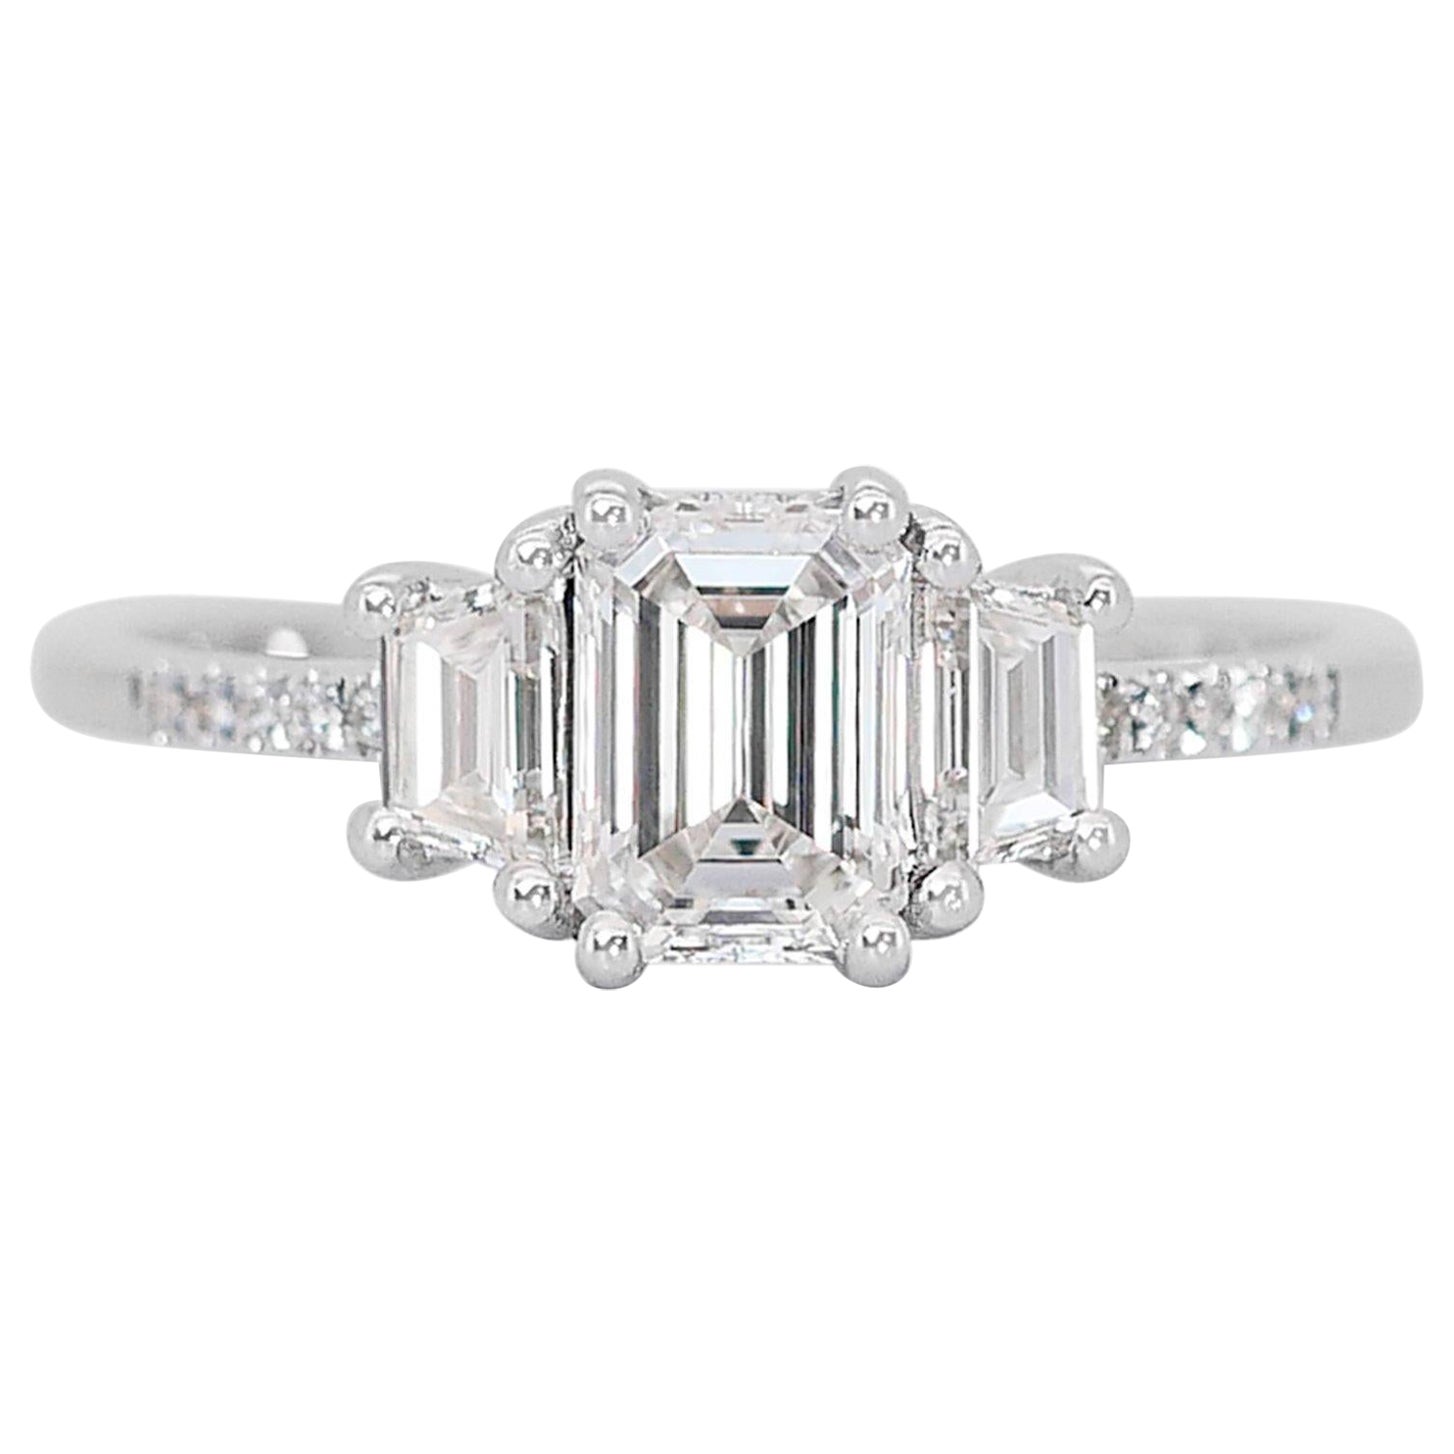 Elegant 1.11ct Diamond 3-Stone Ring in 18k White Gold - IGI Certified For Sale